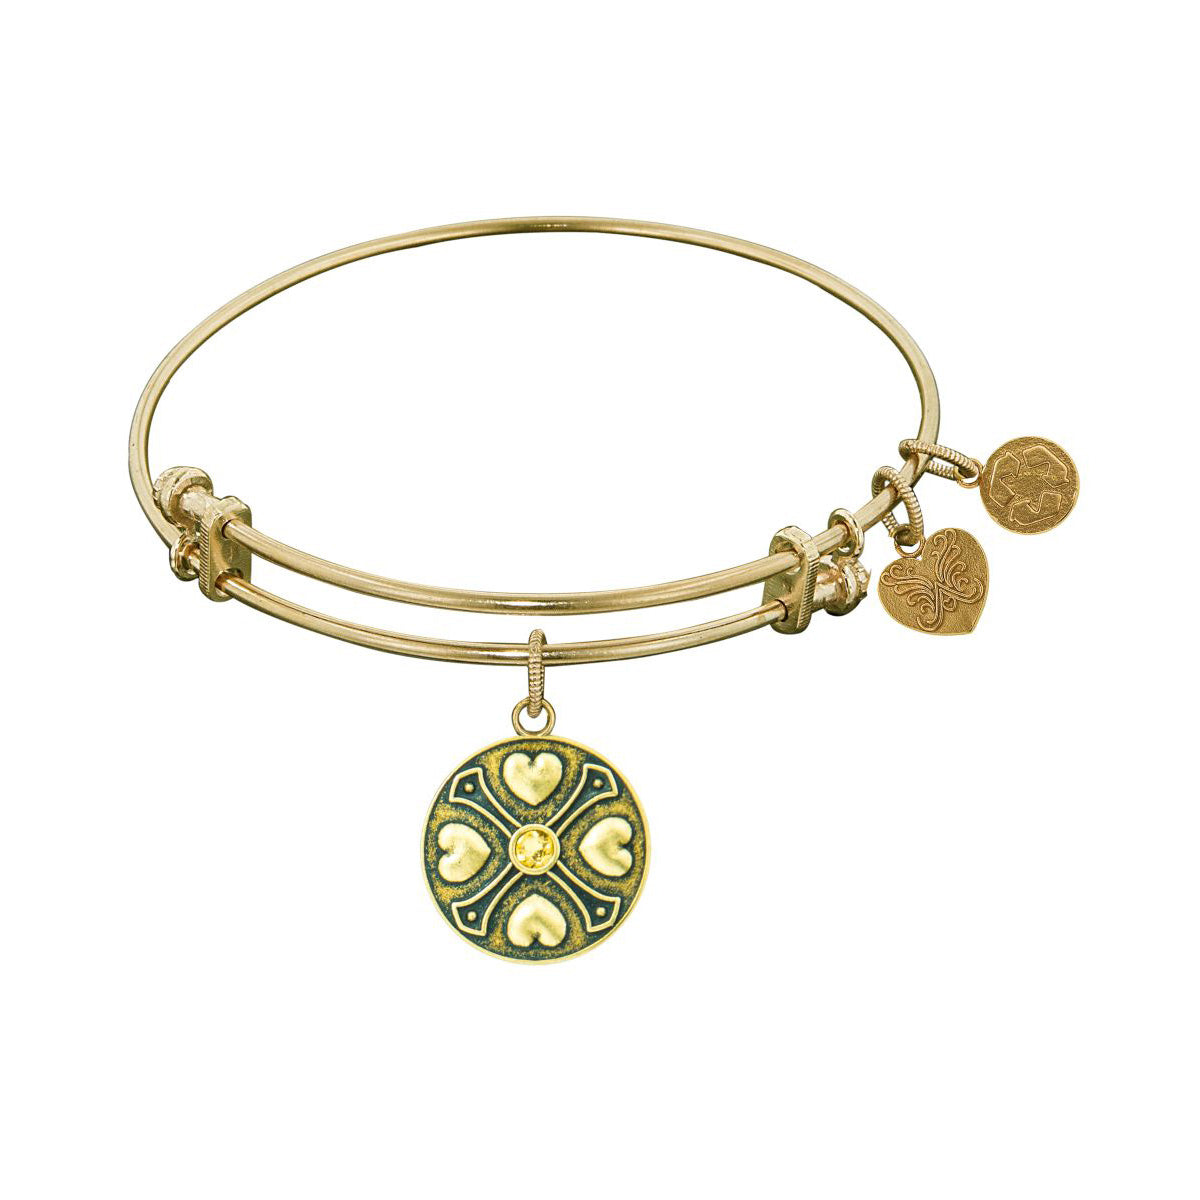 Finish Brass November Birthstone Angelica Bangle Bracelet, 7.25" fine designer jewelry for men and women